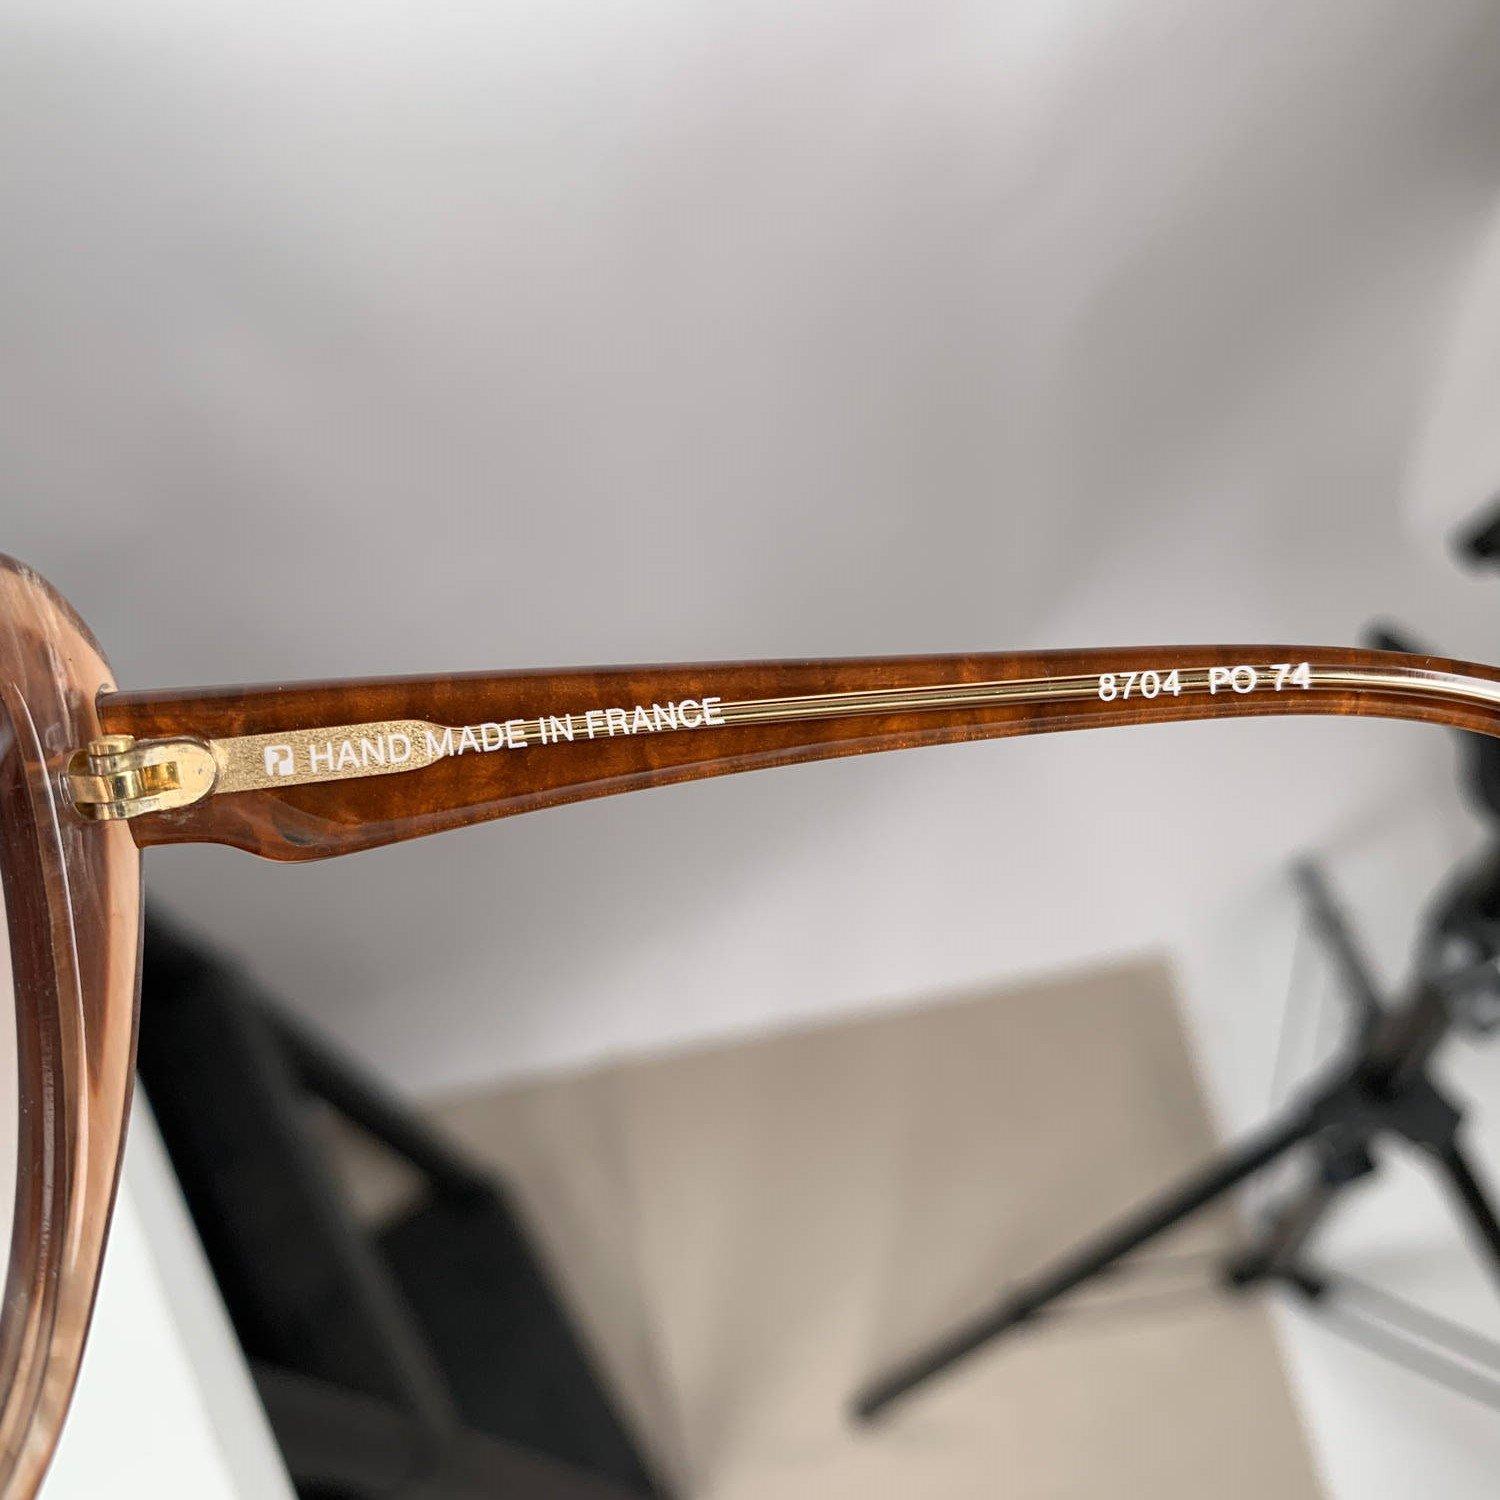 Yves Saint Laurent Vintage Cat Eye Sunglasses Rhinestones 8 704 PO 74 2